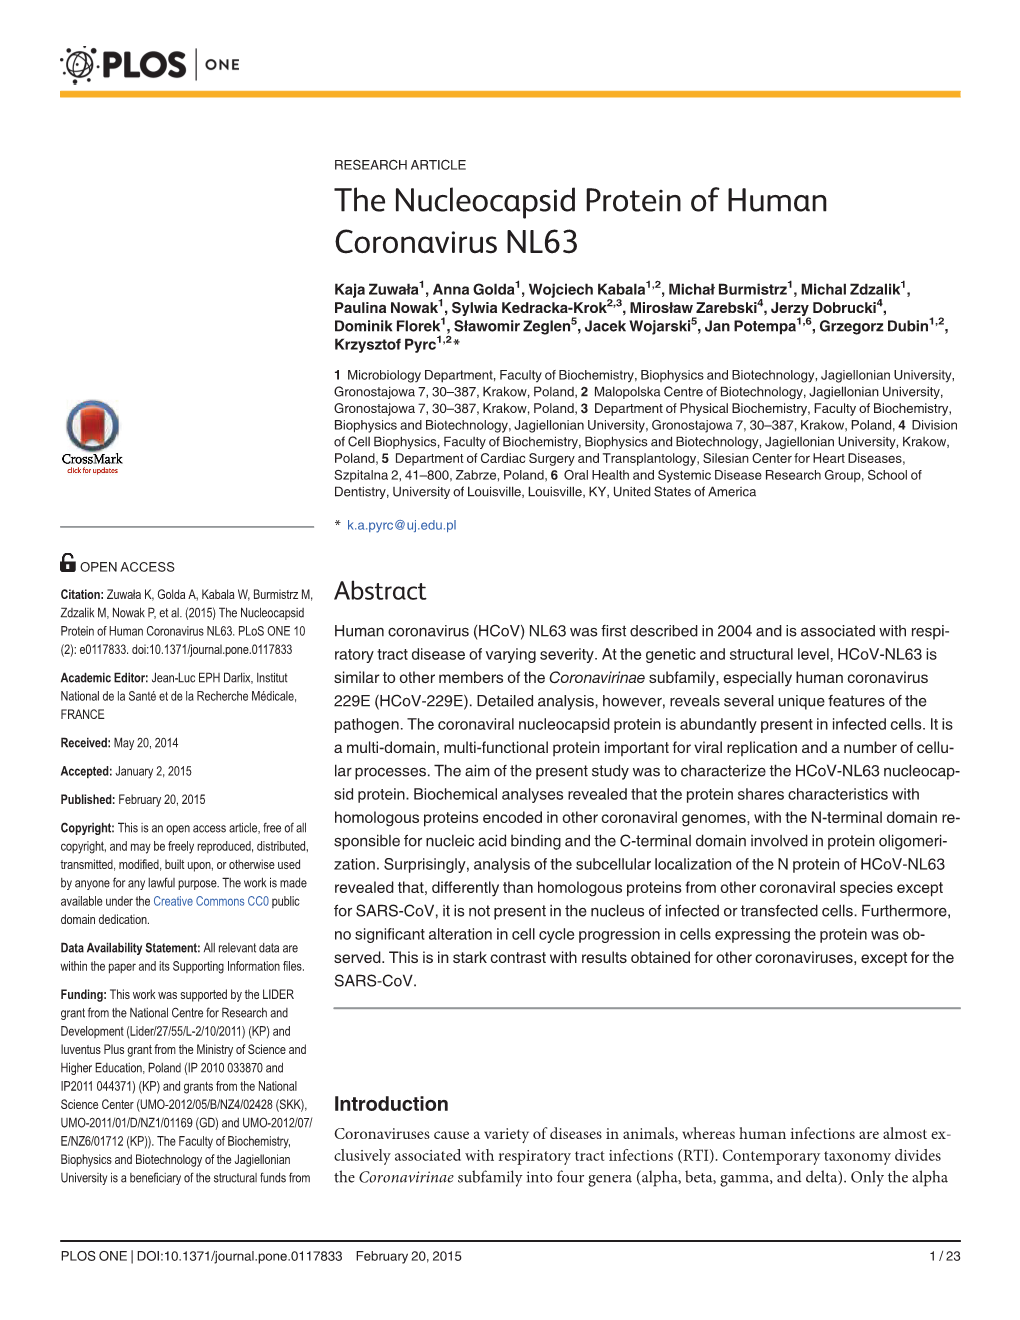 The Nucleocapsid Protein of Human Coronavirus NL63